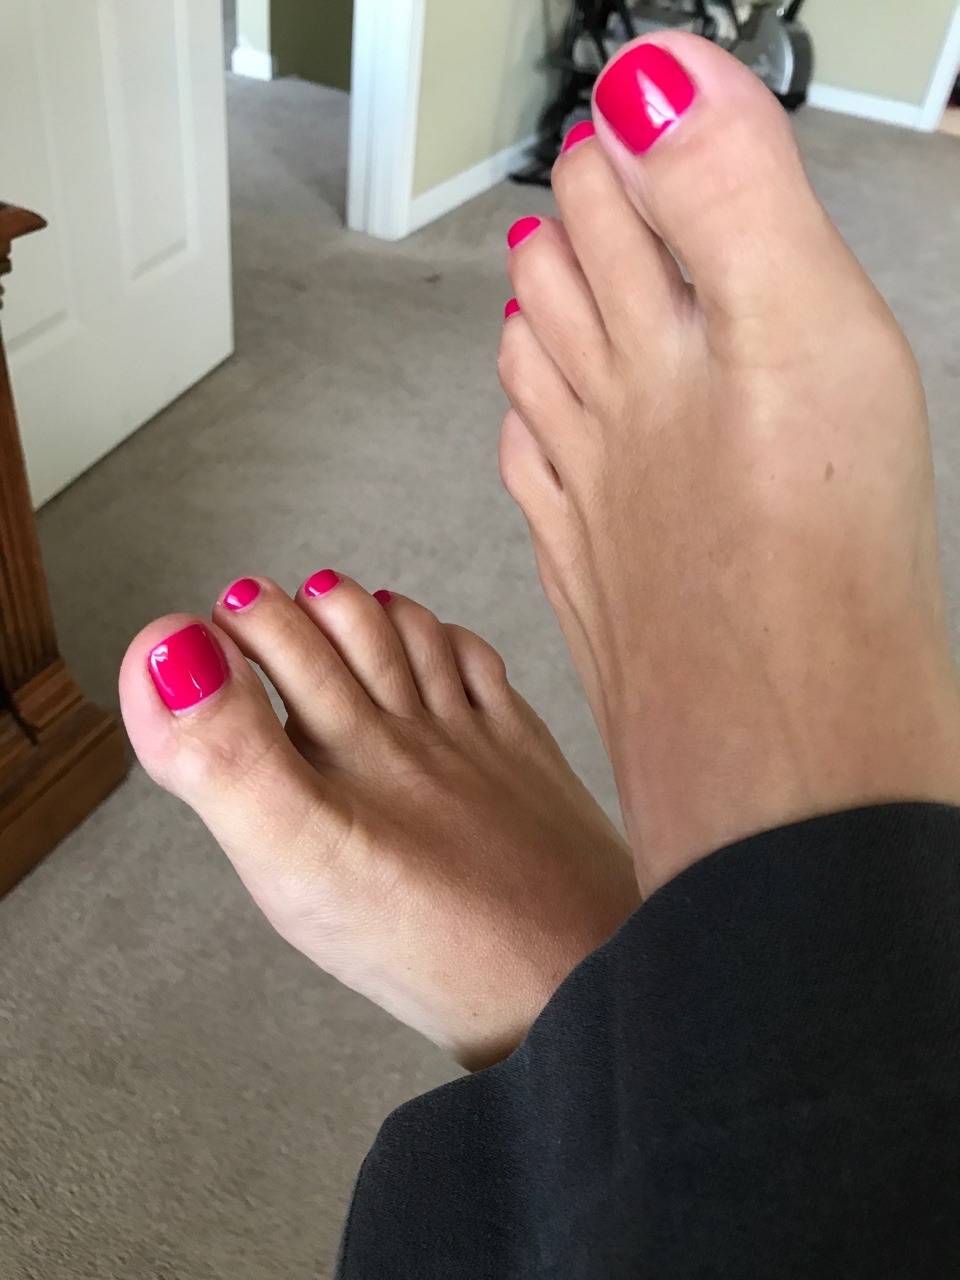 Good Morning Feet